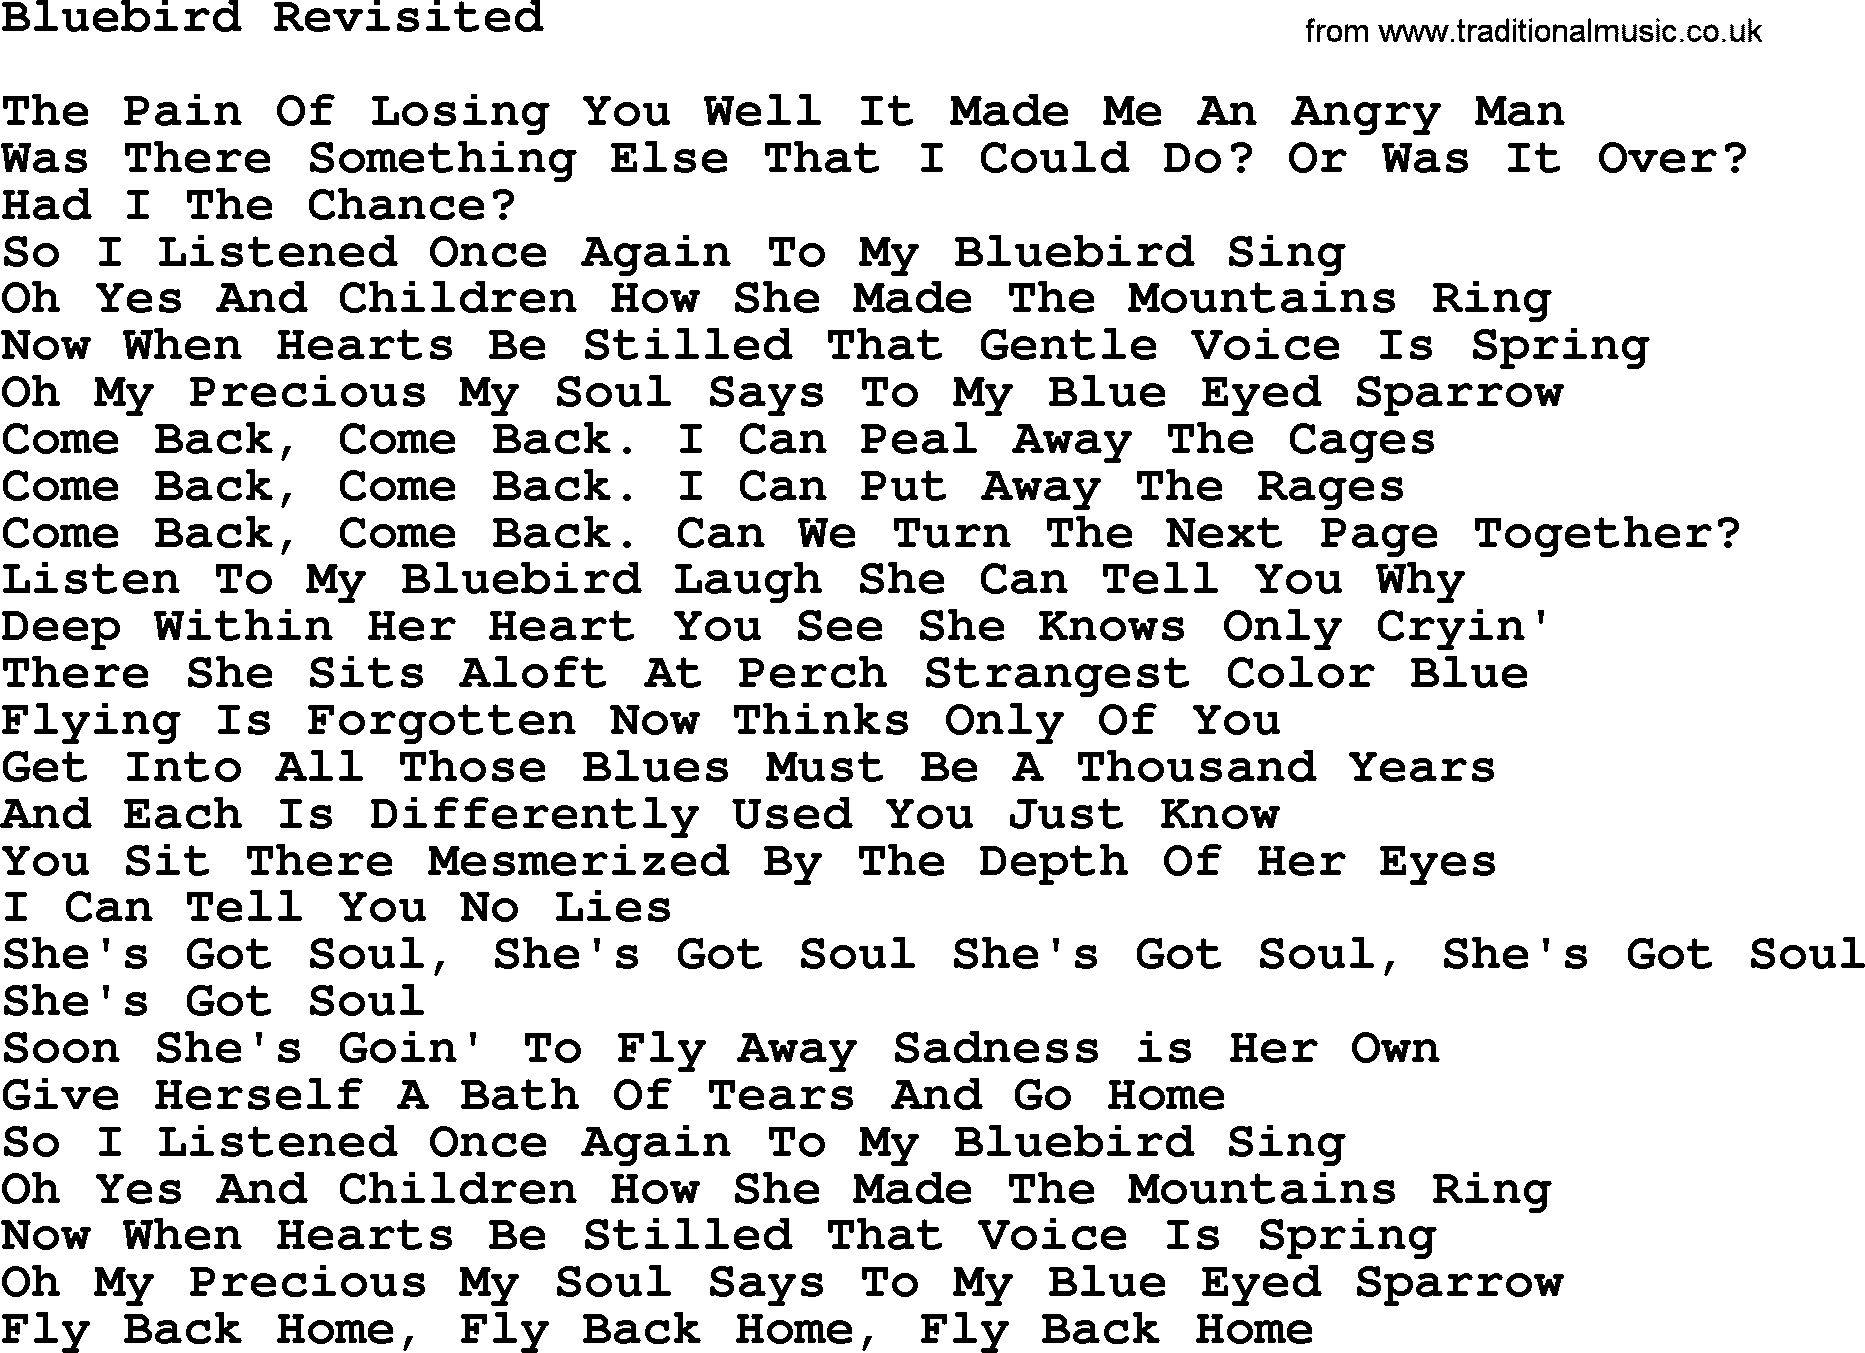 The Byrds song Bluebird Revisited, lyrics